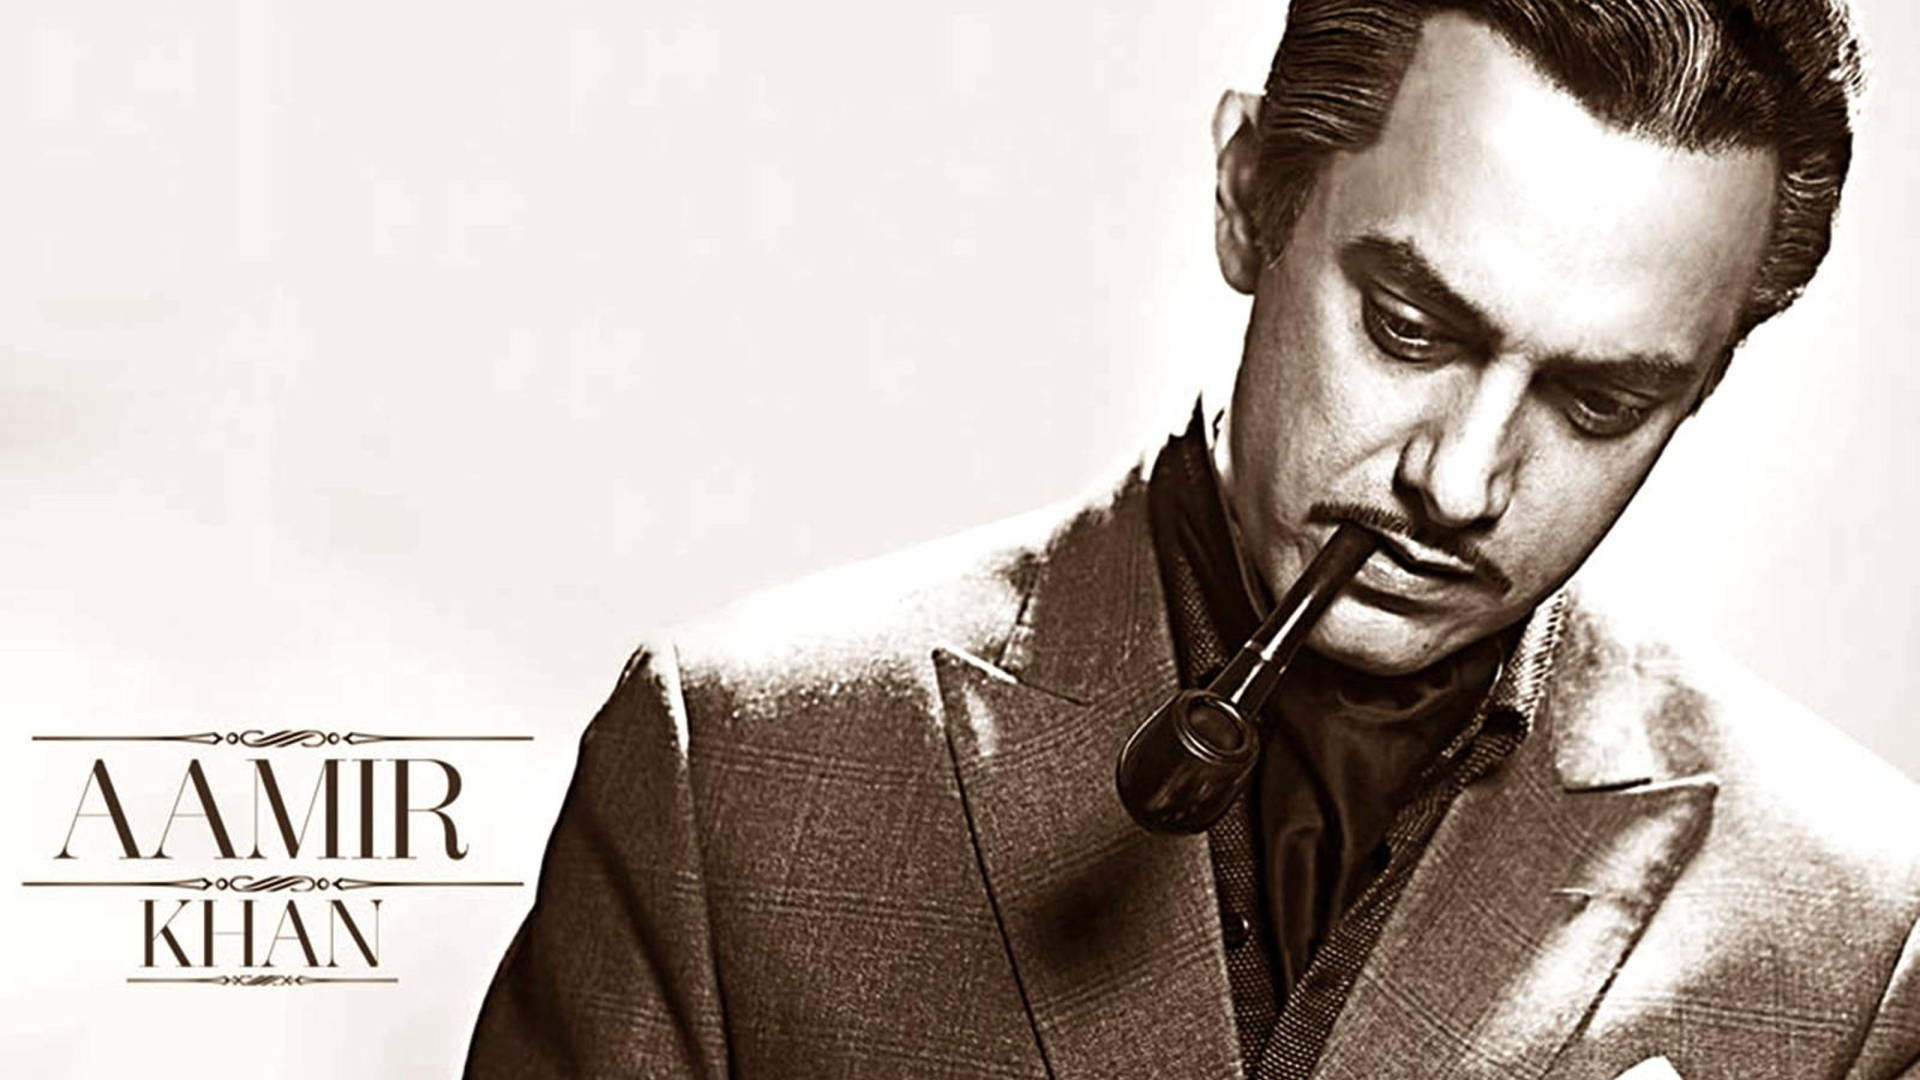 Aamir Khan Vintage Photograph Background